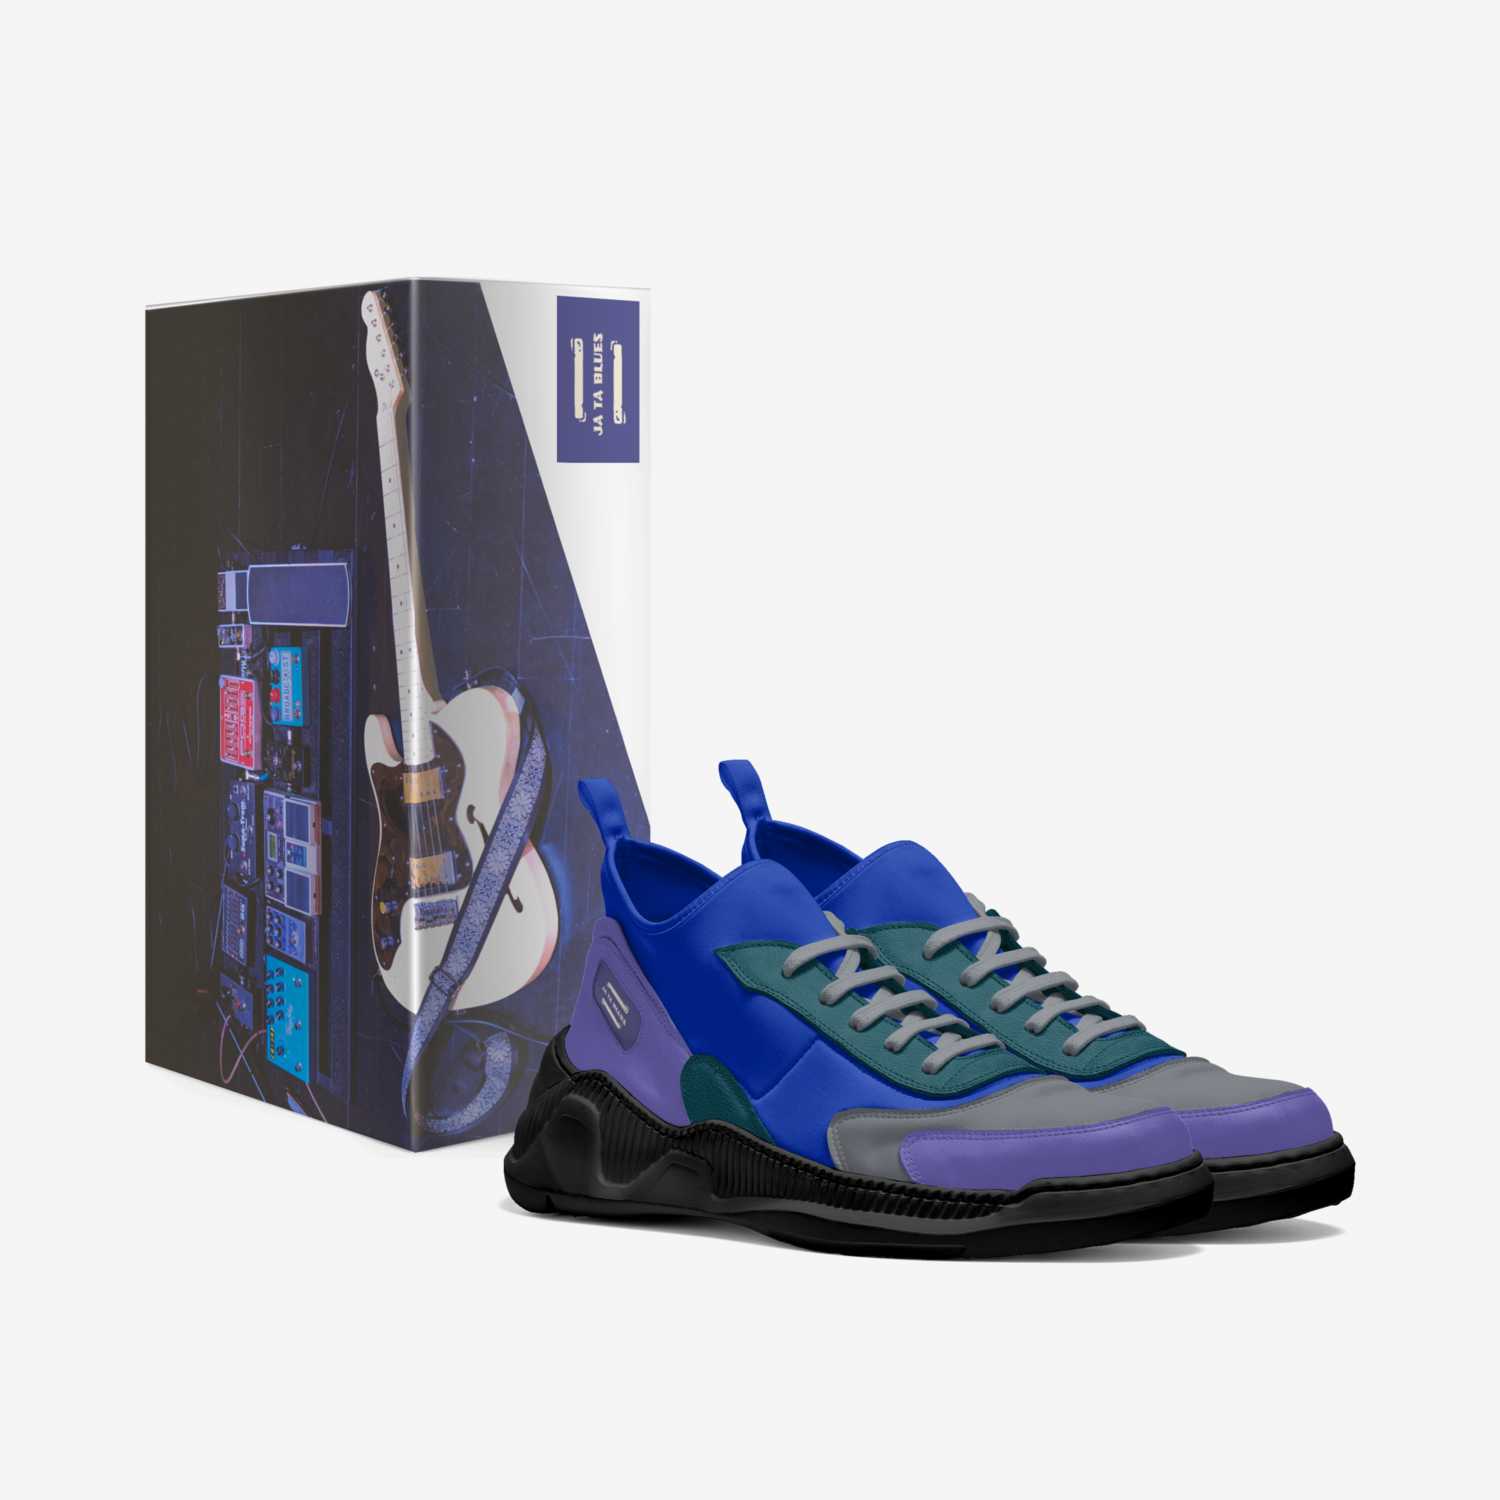 THE BLUES  custom made in Italy shoes by Ja (jarata) Ta | Box view